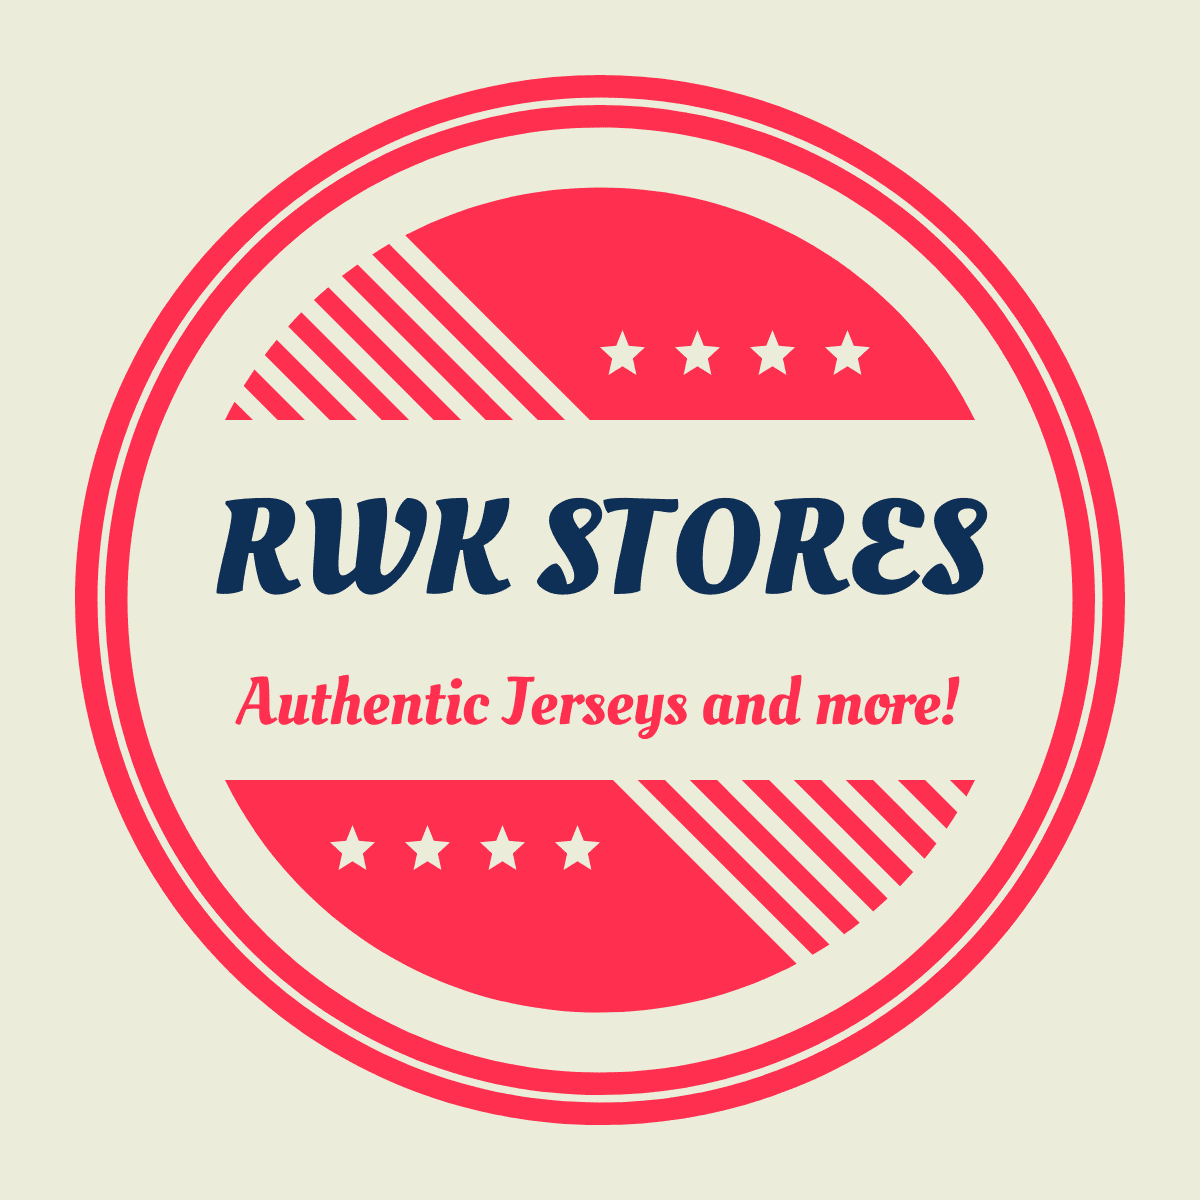 RWK Stores